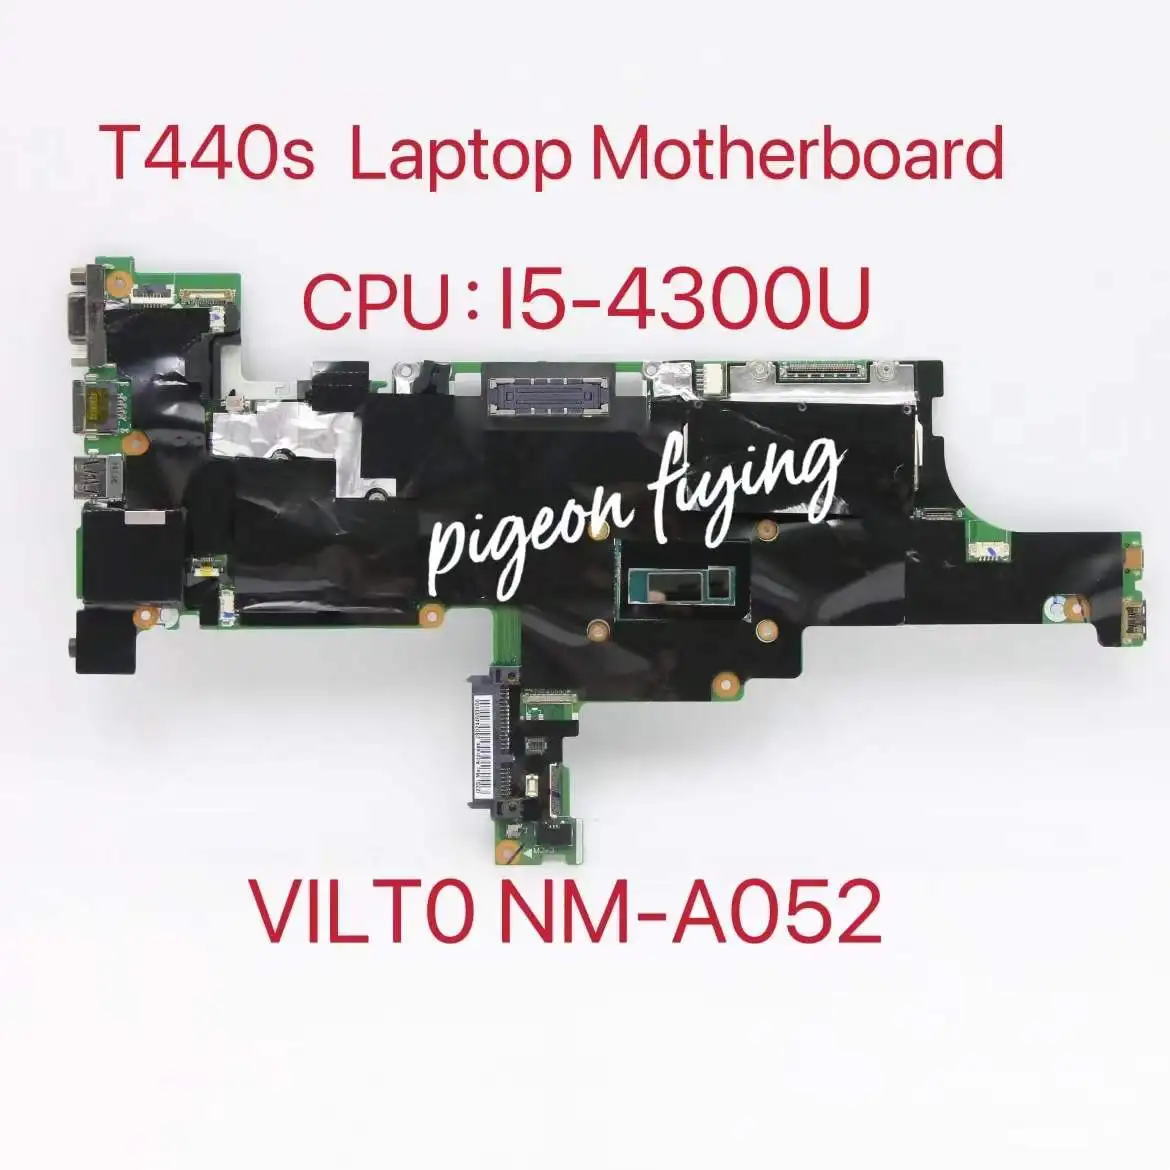 VILT0 NM-A052 для Lenovo Thinkpad T440S материнская плата ноутбука CPU: I5-4300U 4G-RAM FRU:04X3905 04X3903 04X3906